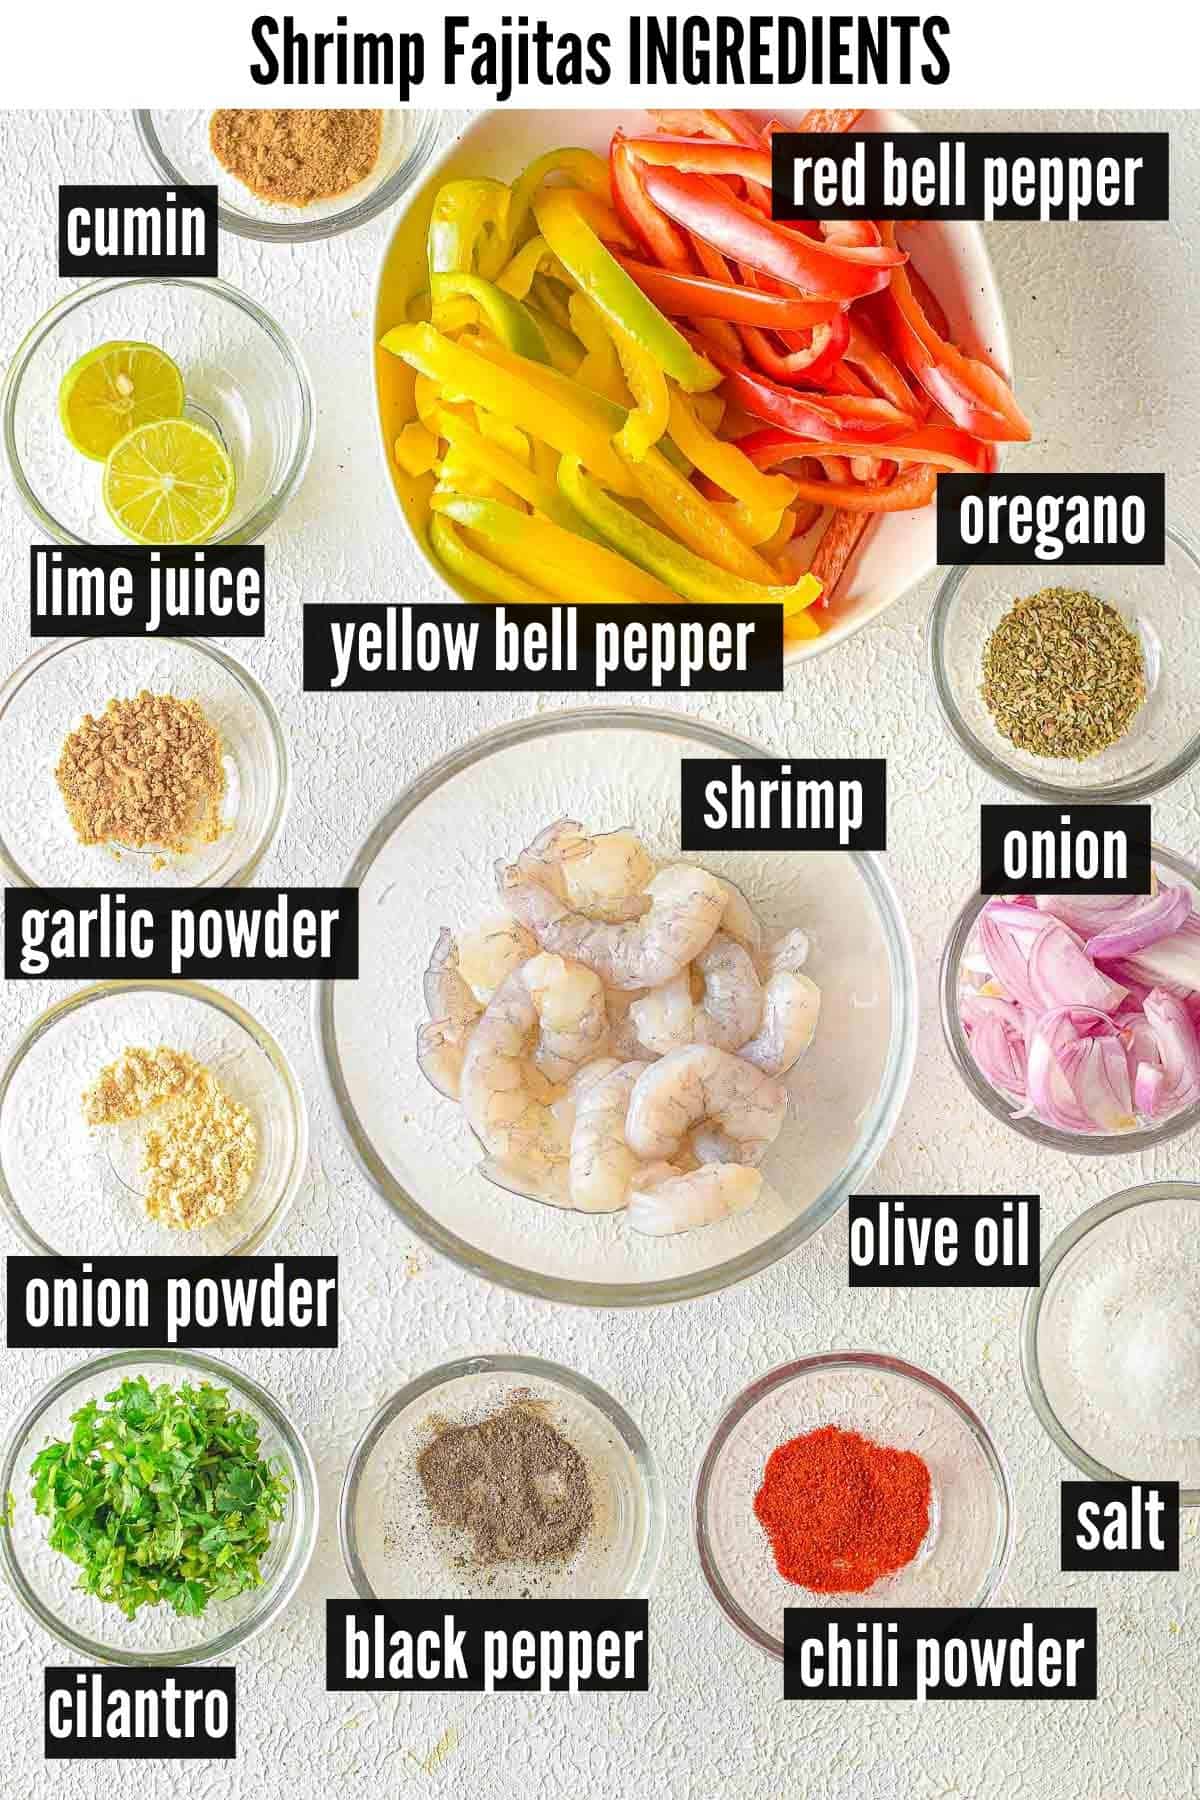 shrimp fajitas labelled ingredients.